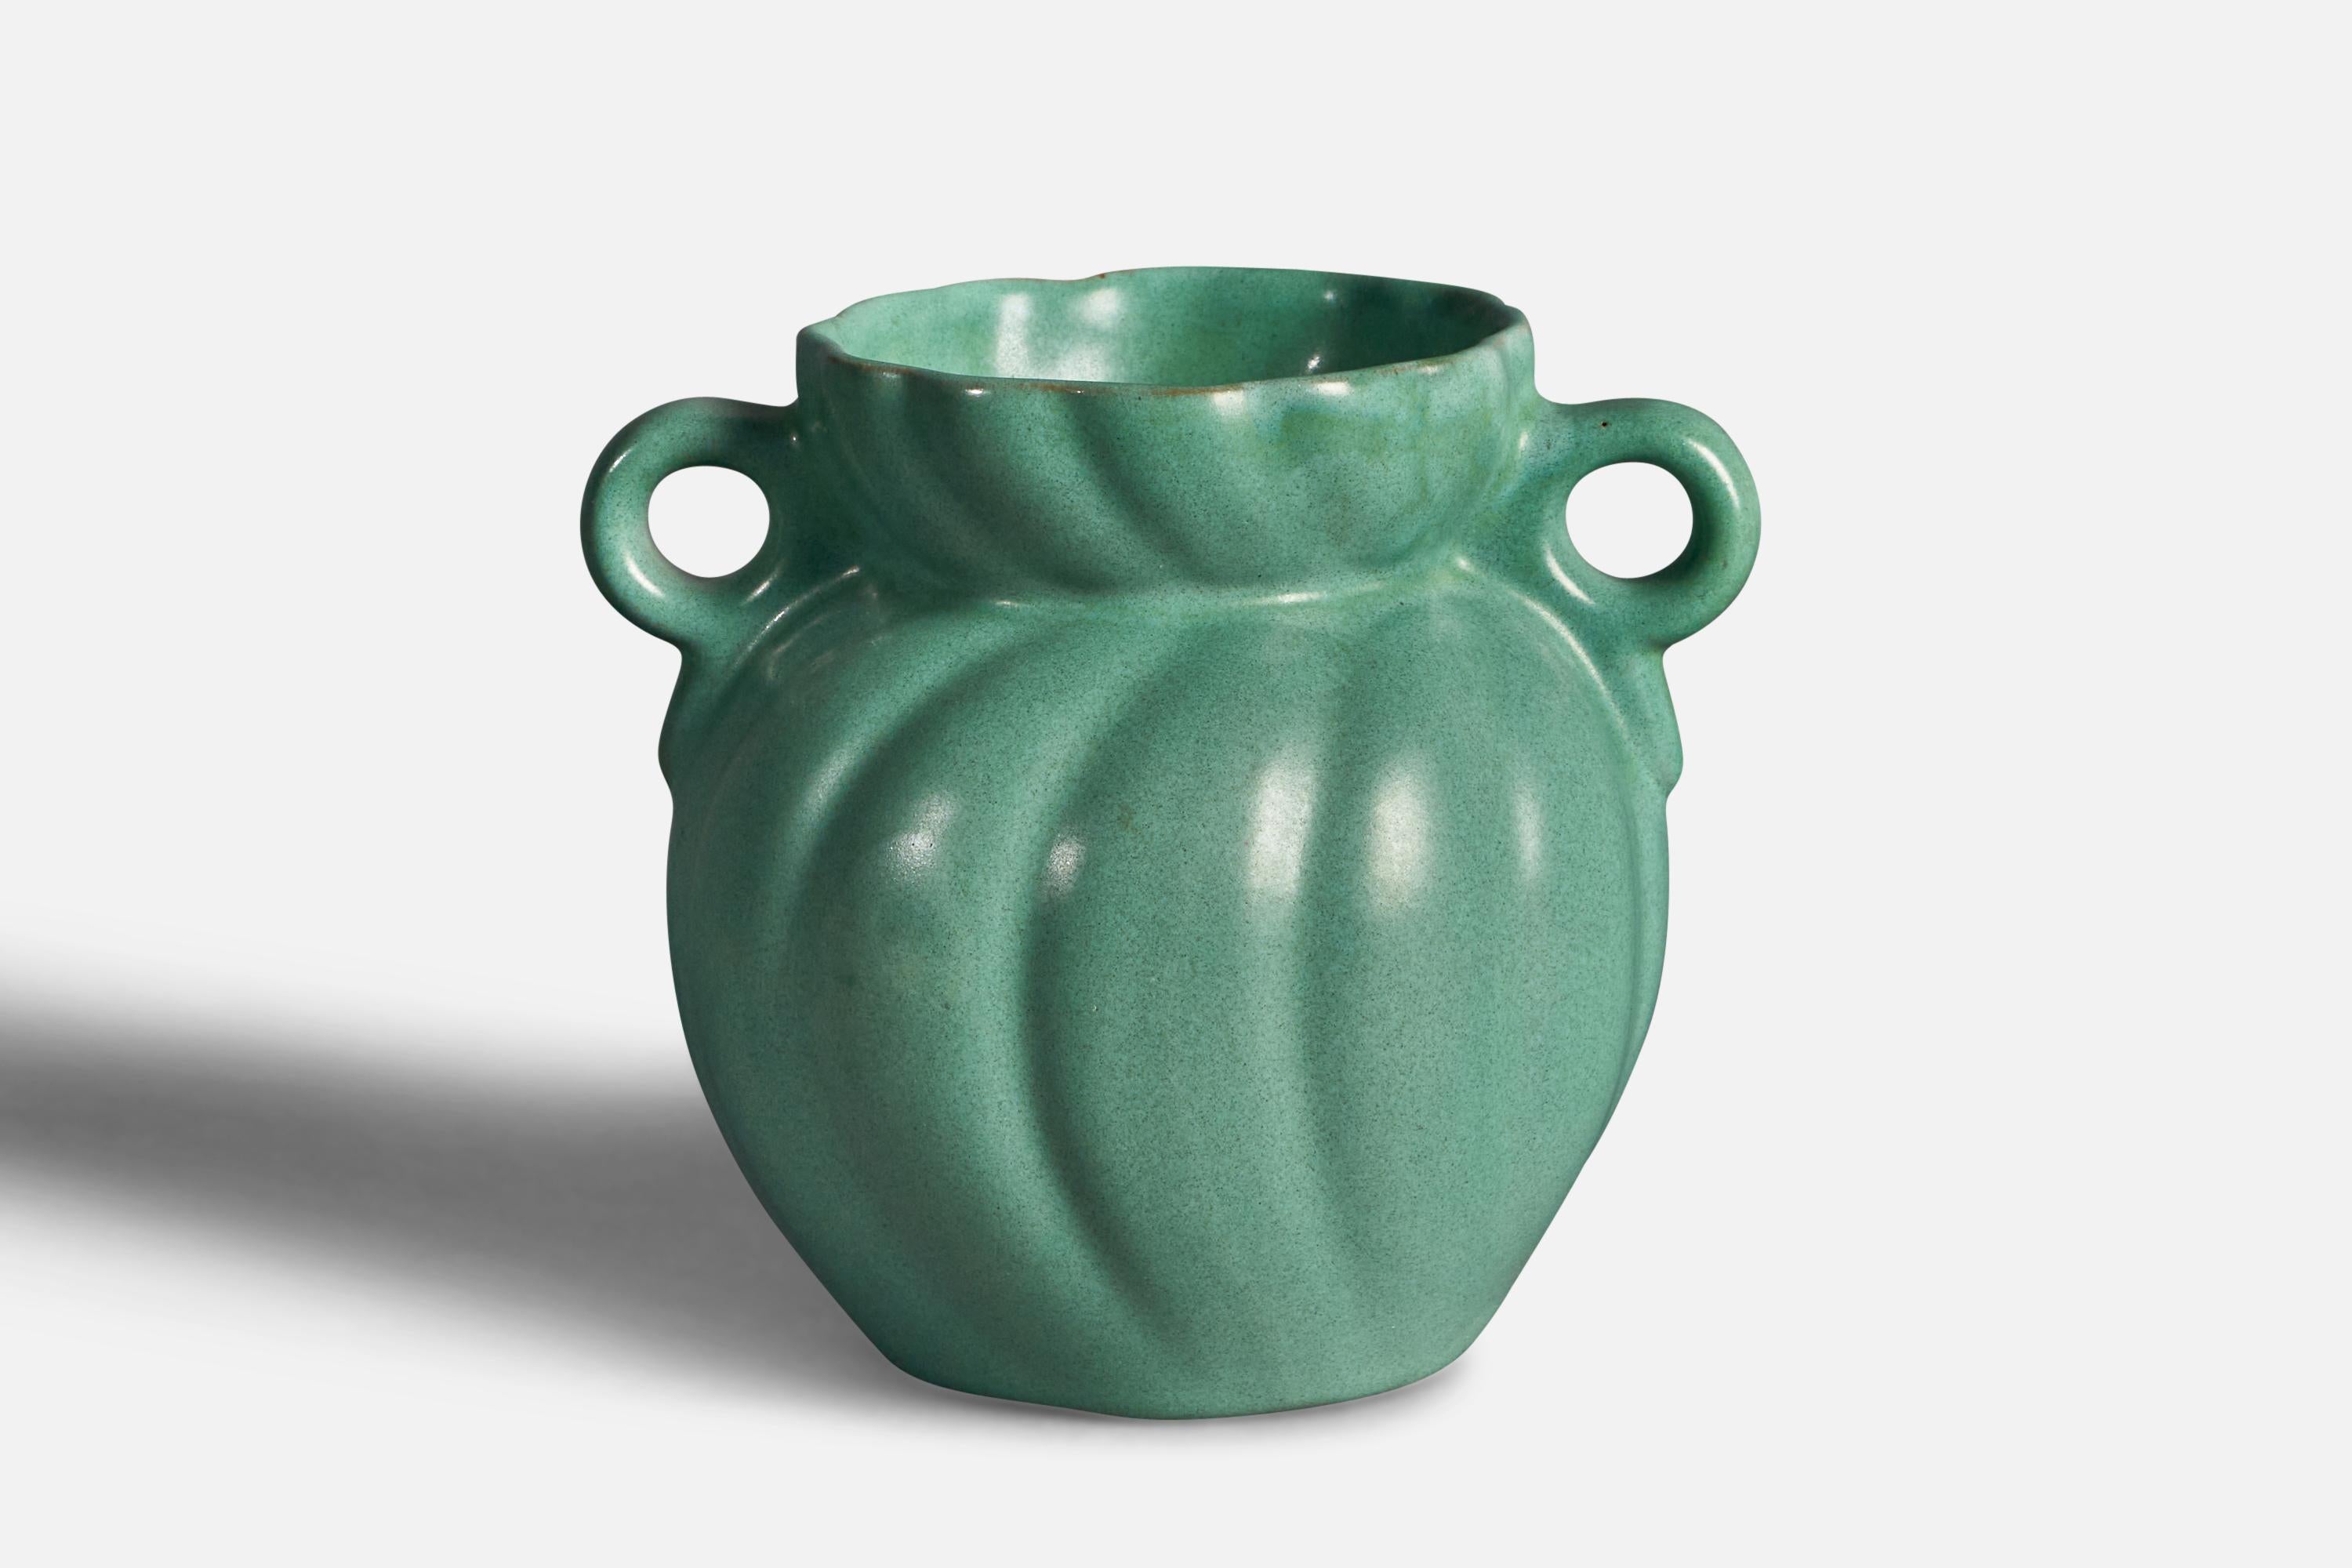 A green-glazed earthenware vase designed and produced in Sweden, c. 1920s.